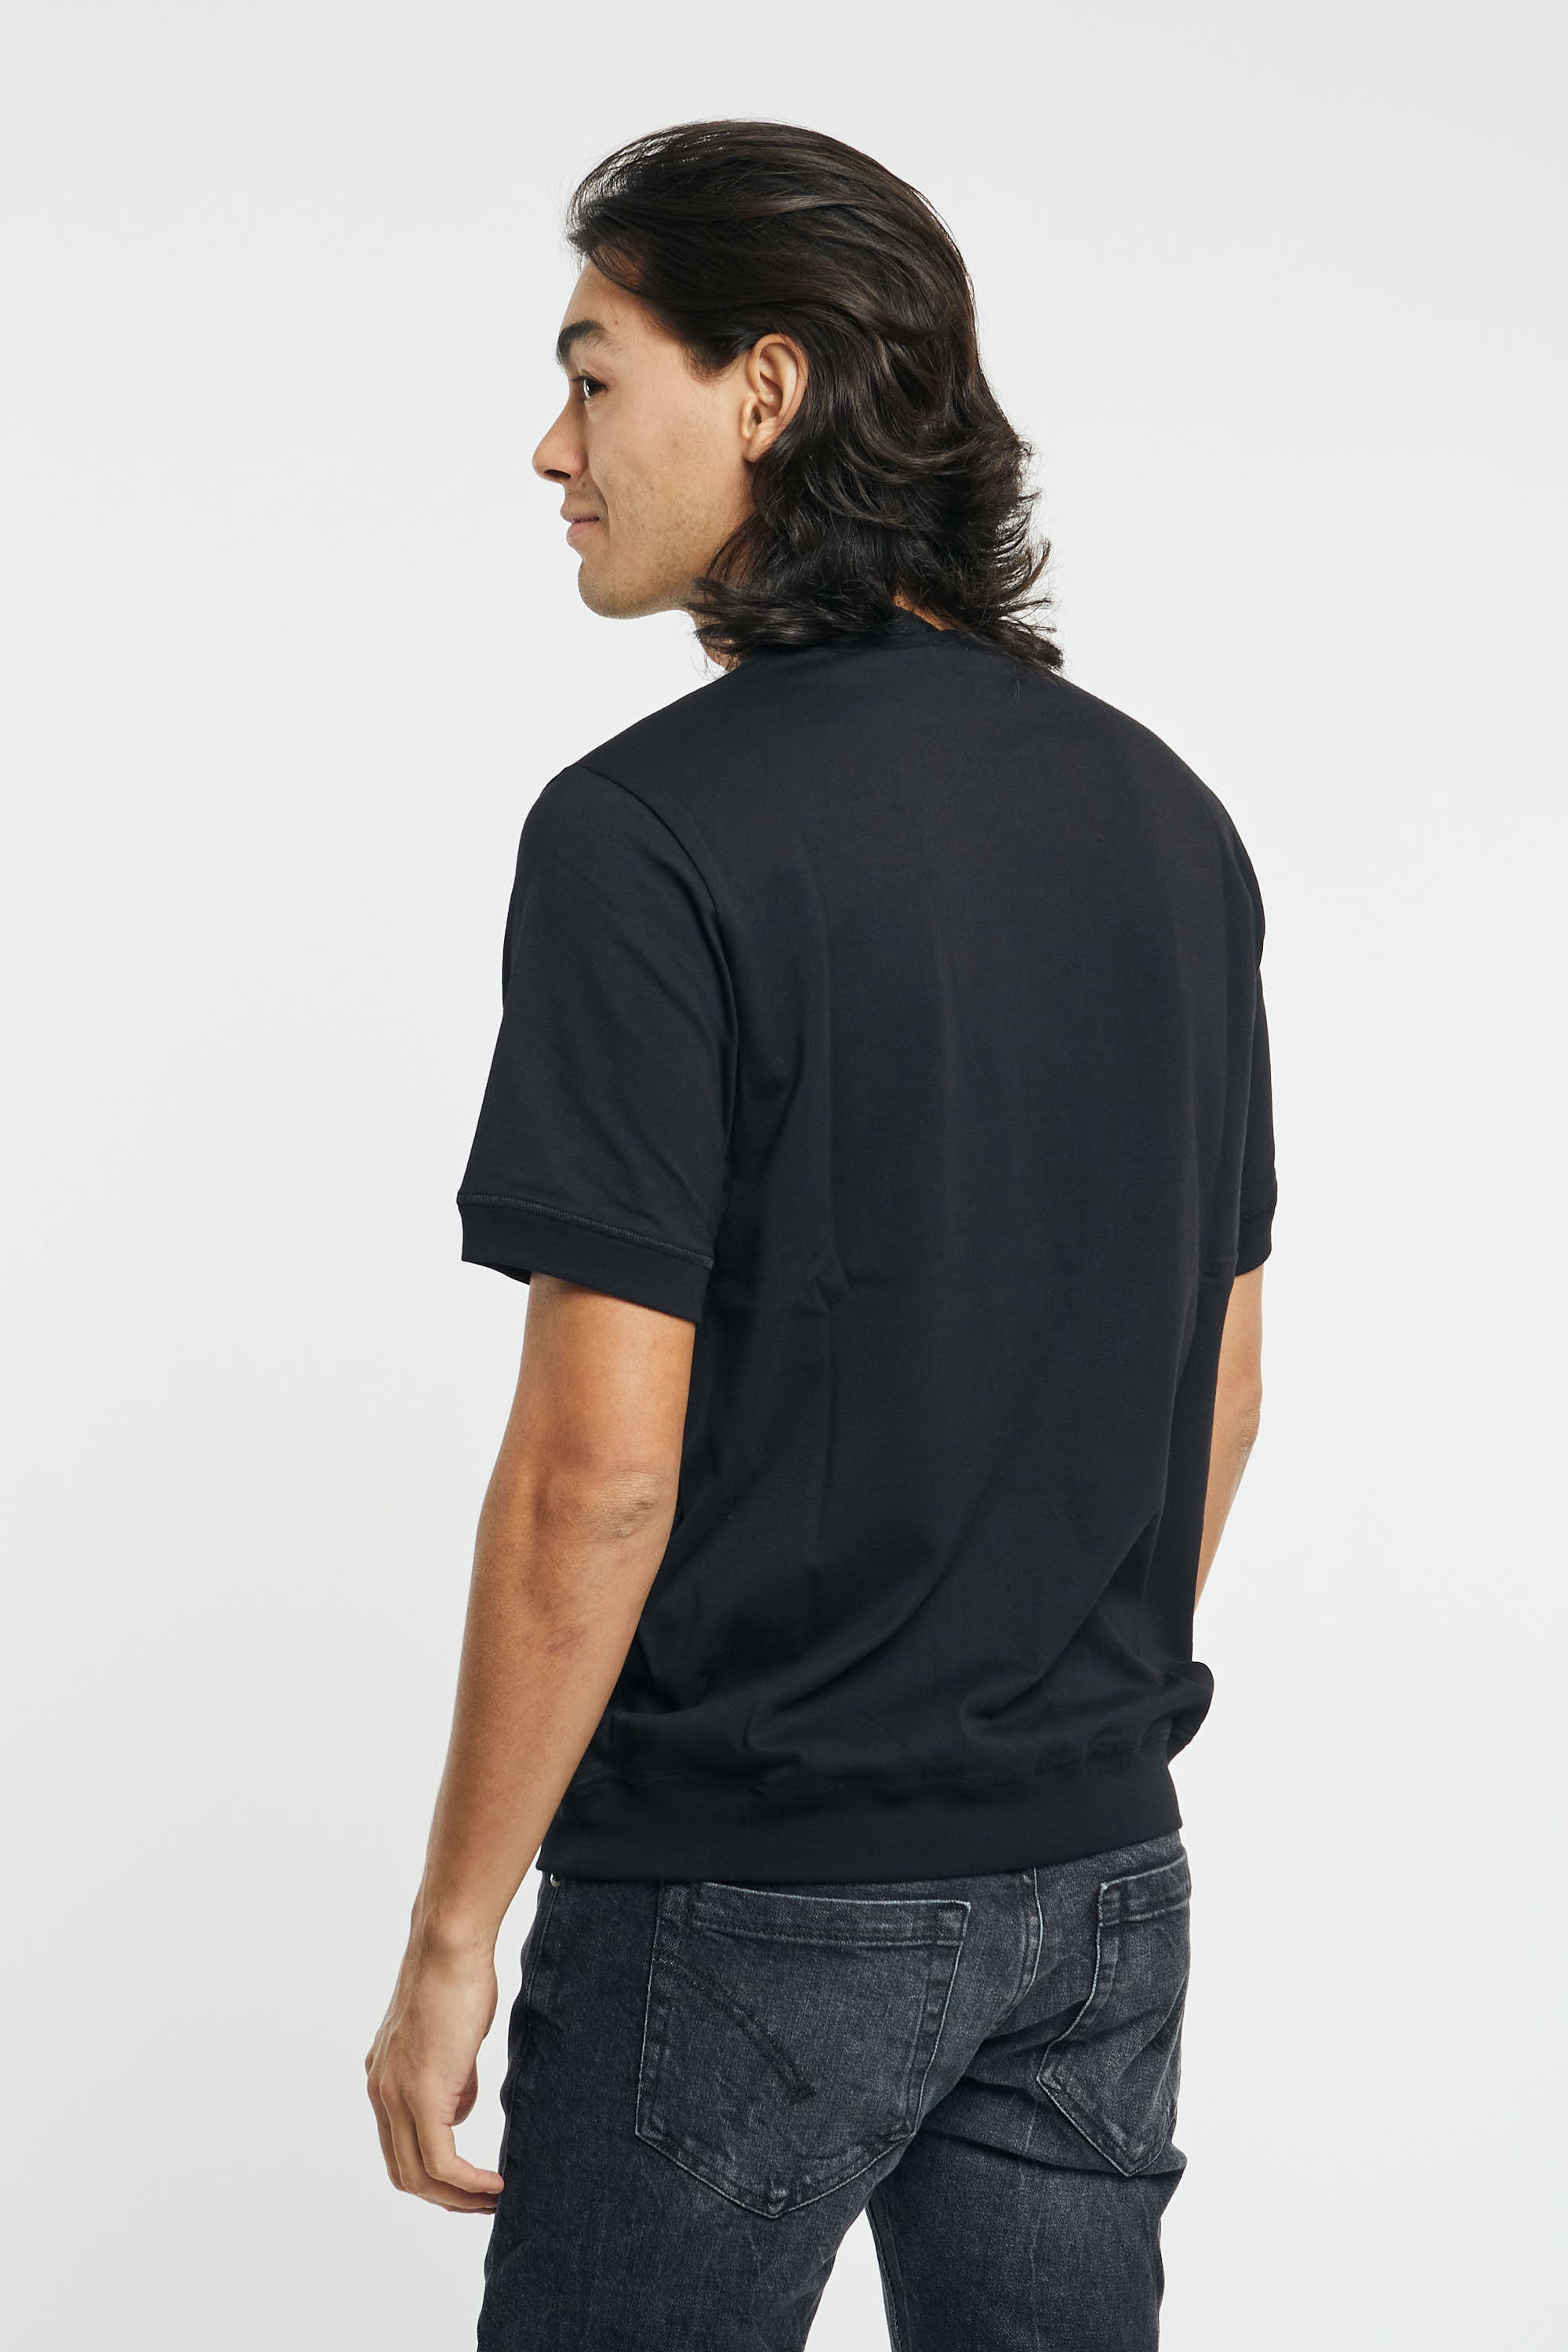 N°21 Cotton/Eco-leather T-Shirt Black - 2